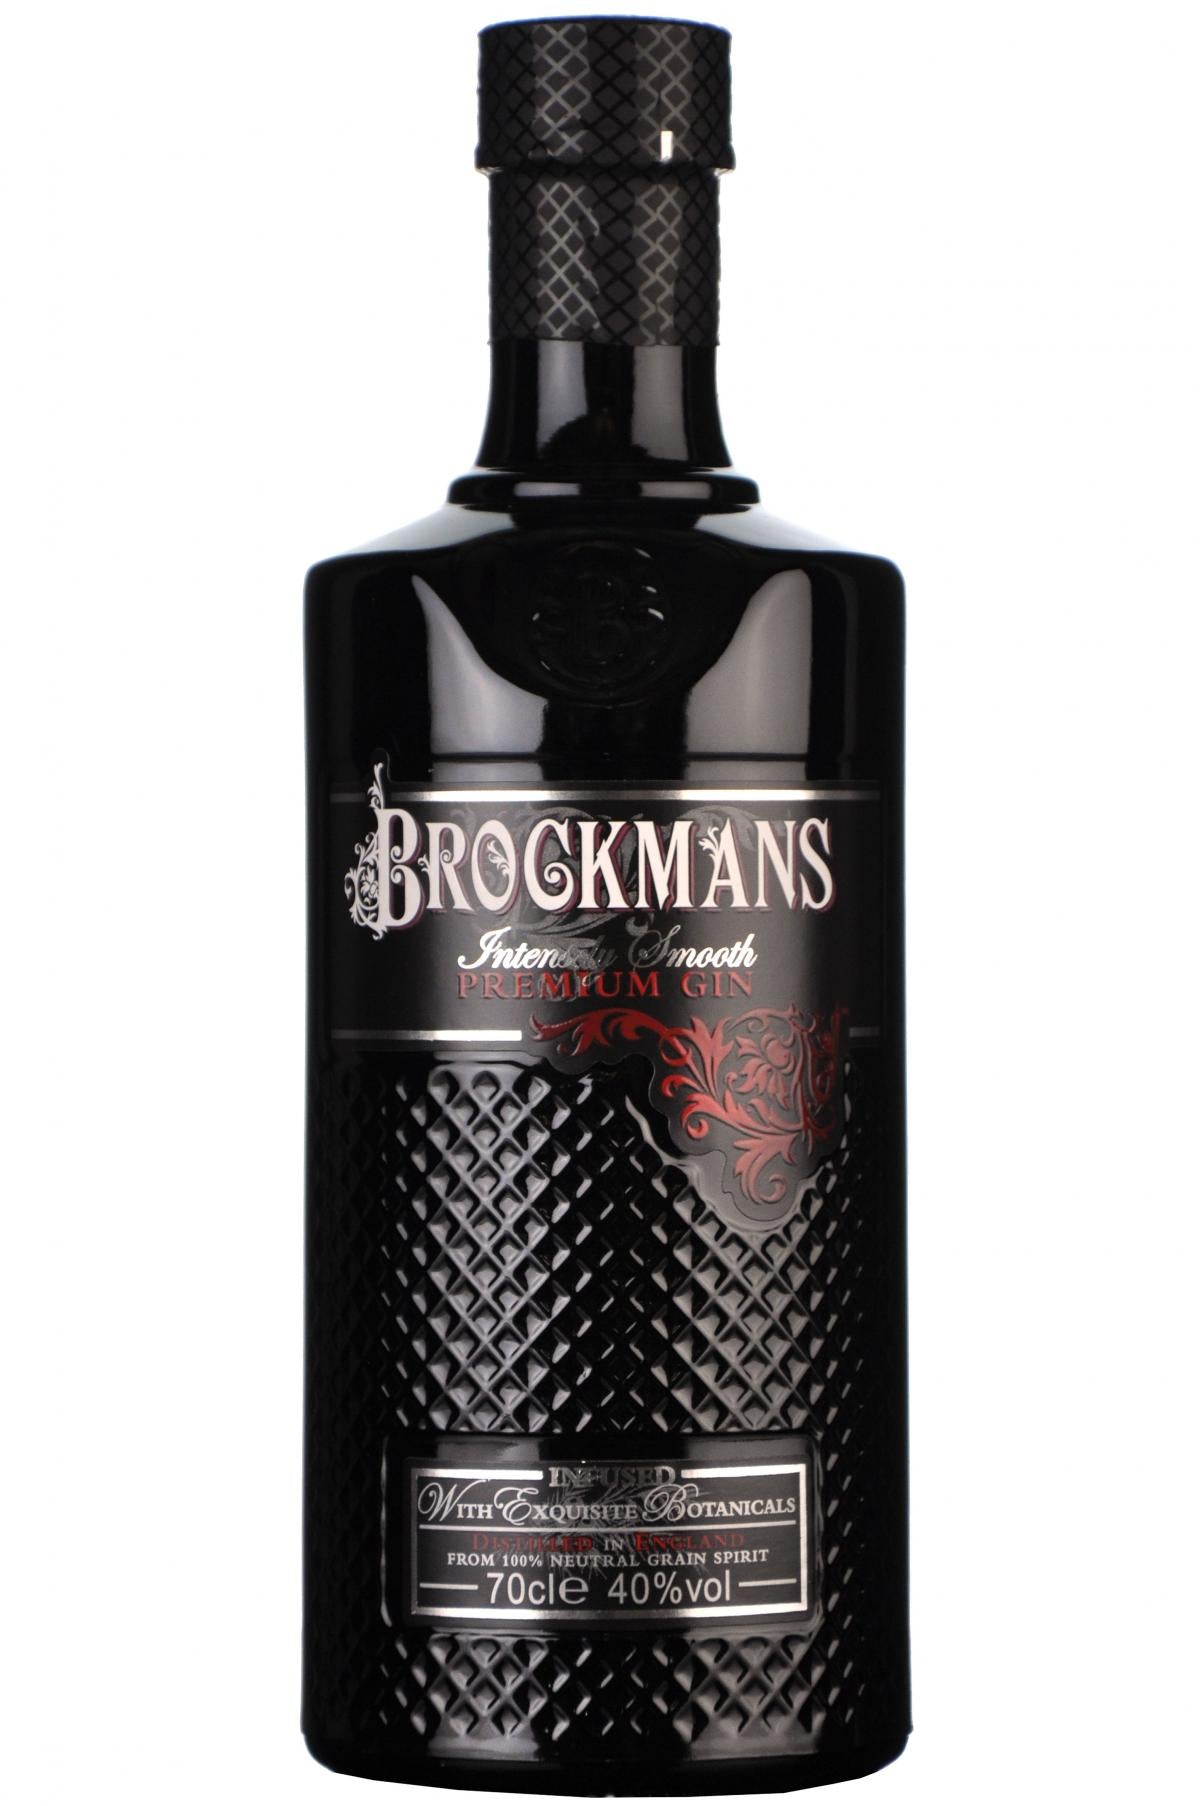 brockmans intensely smooth premium gin